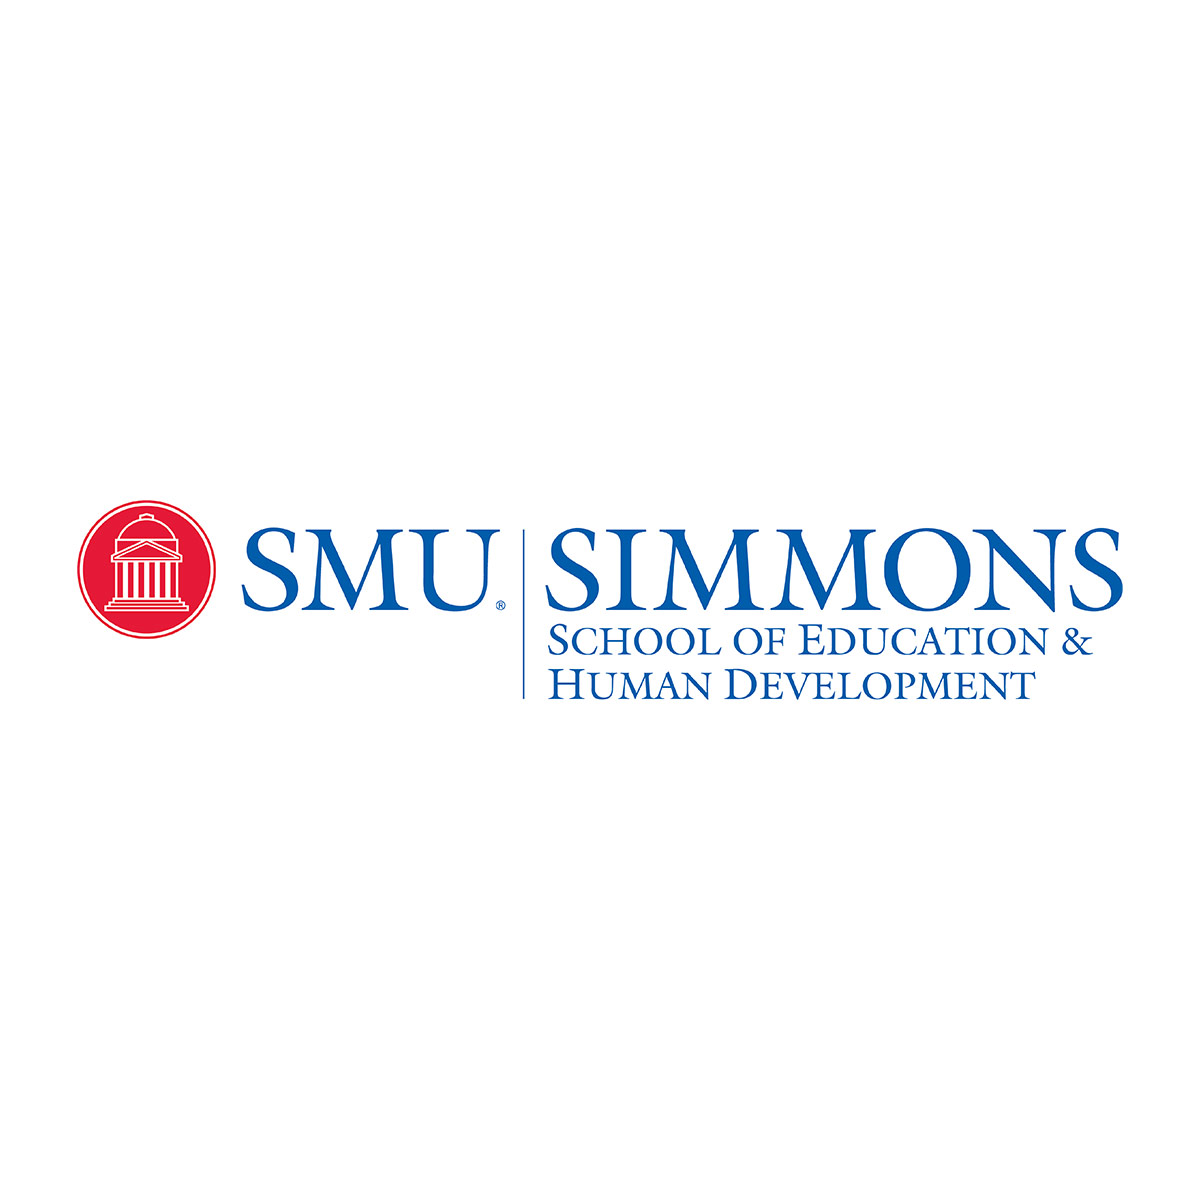 SMU Simmons School of Education & Human Development logo